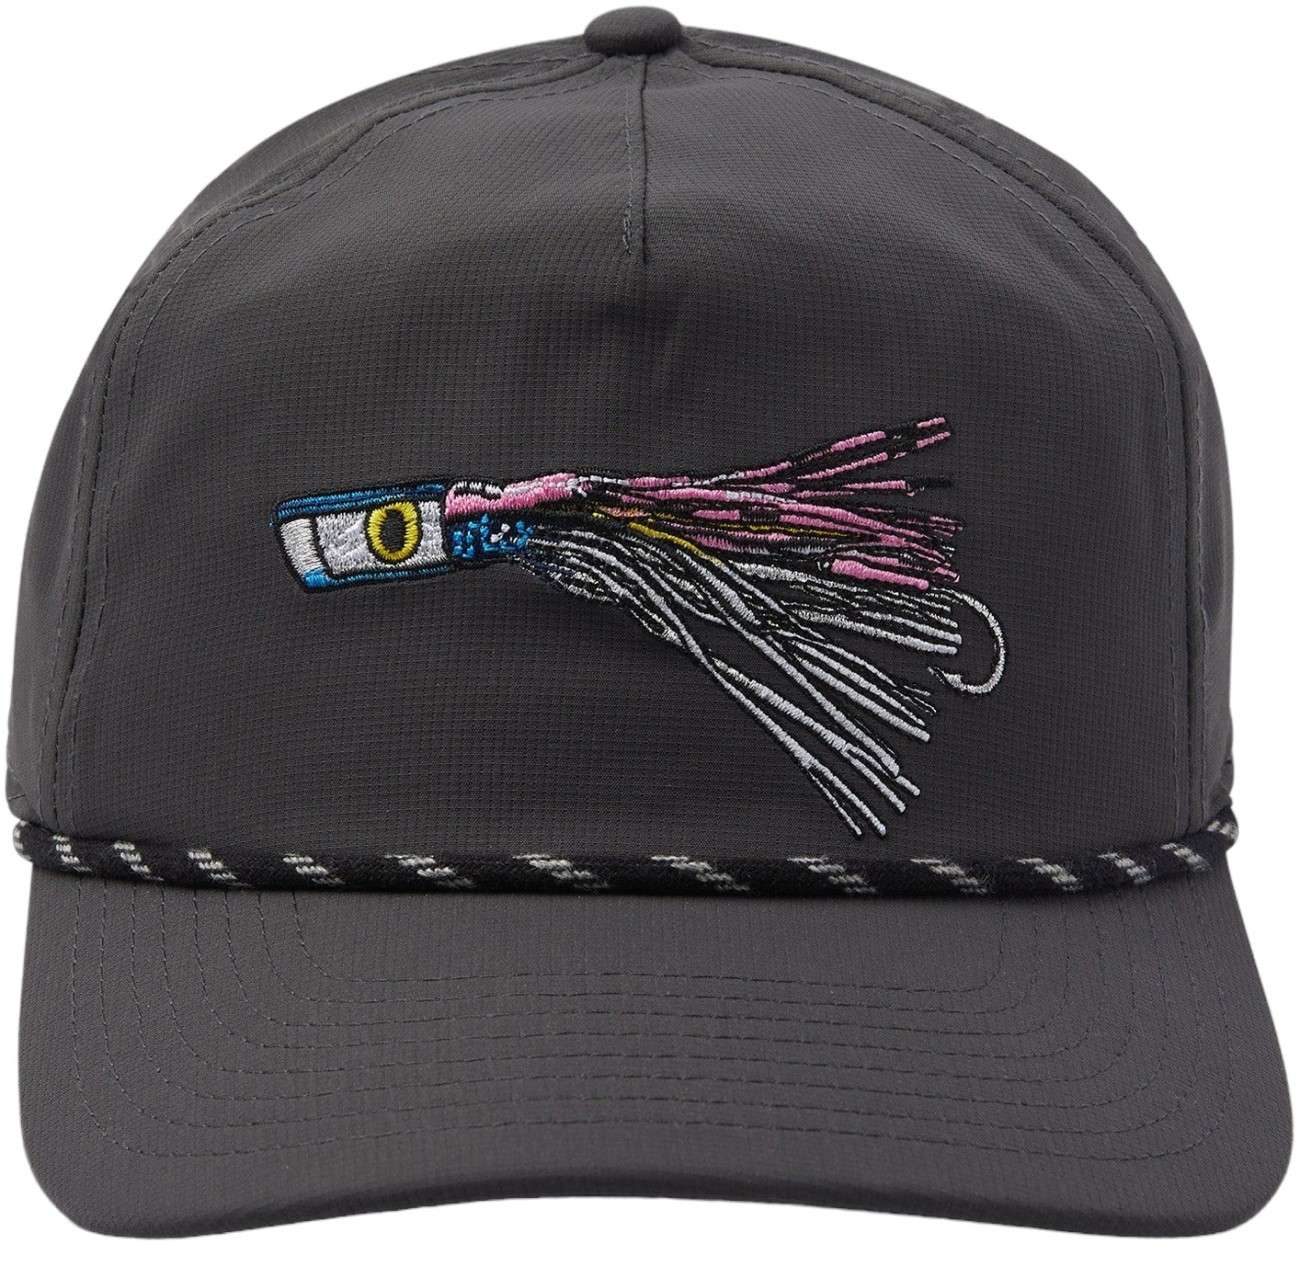 Pelagic Lured Unstructured Snapback Hat - Graphite